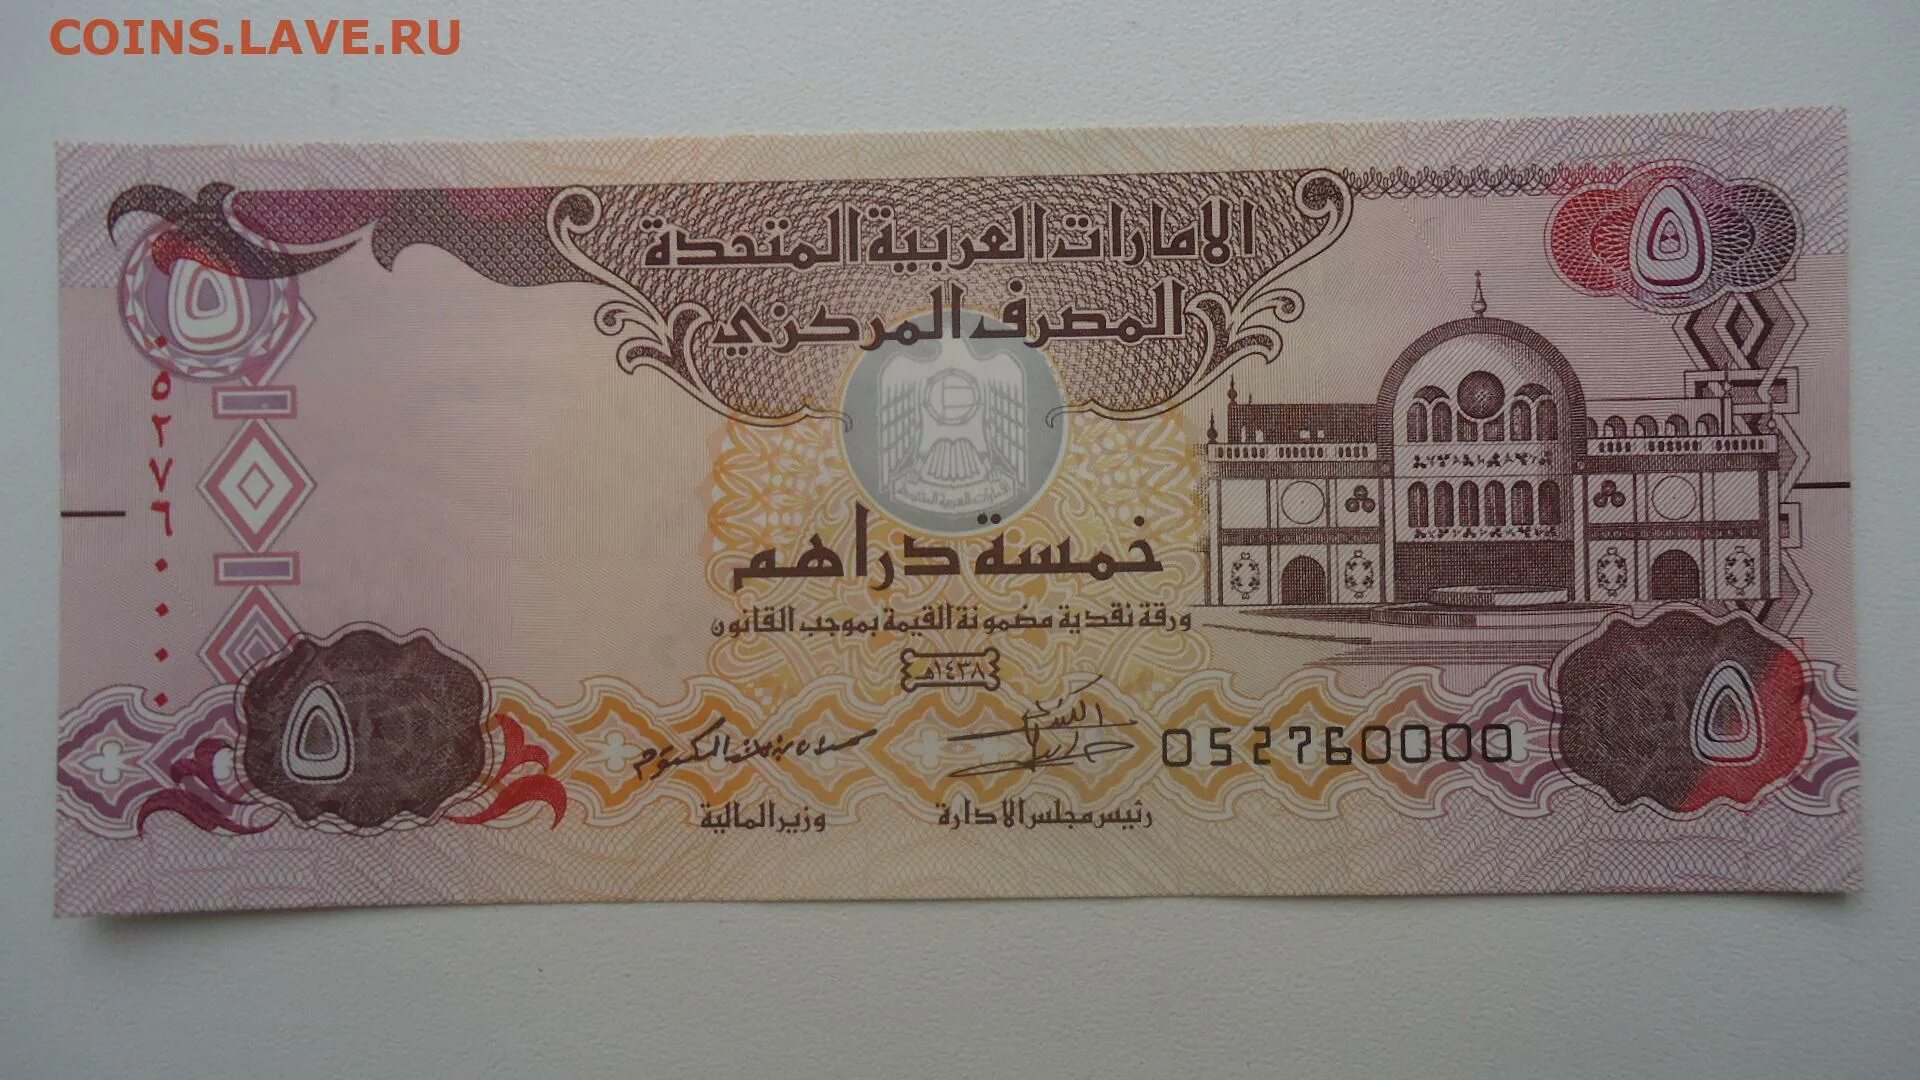 5 Дирхам ОАЭ. Банкнота ОАЭ 10 дирхам. 25 Дирхам Объединенные арабские эмираты. Дирхам ОАЭ К доллару США. 15 дирхам сколько